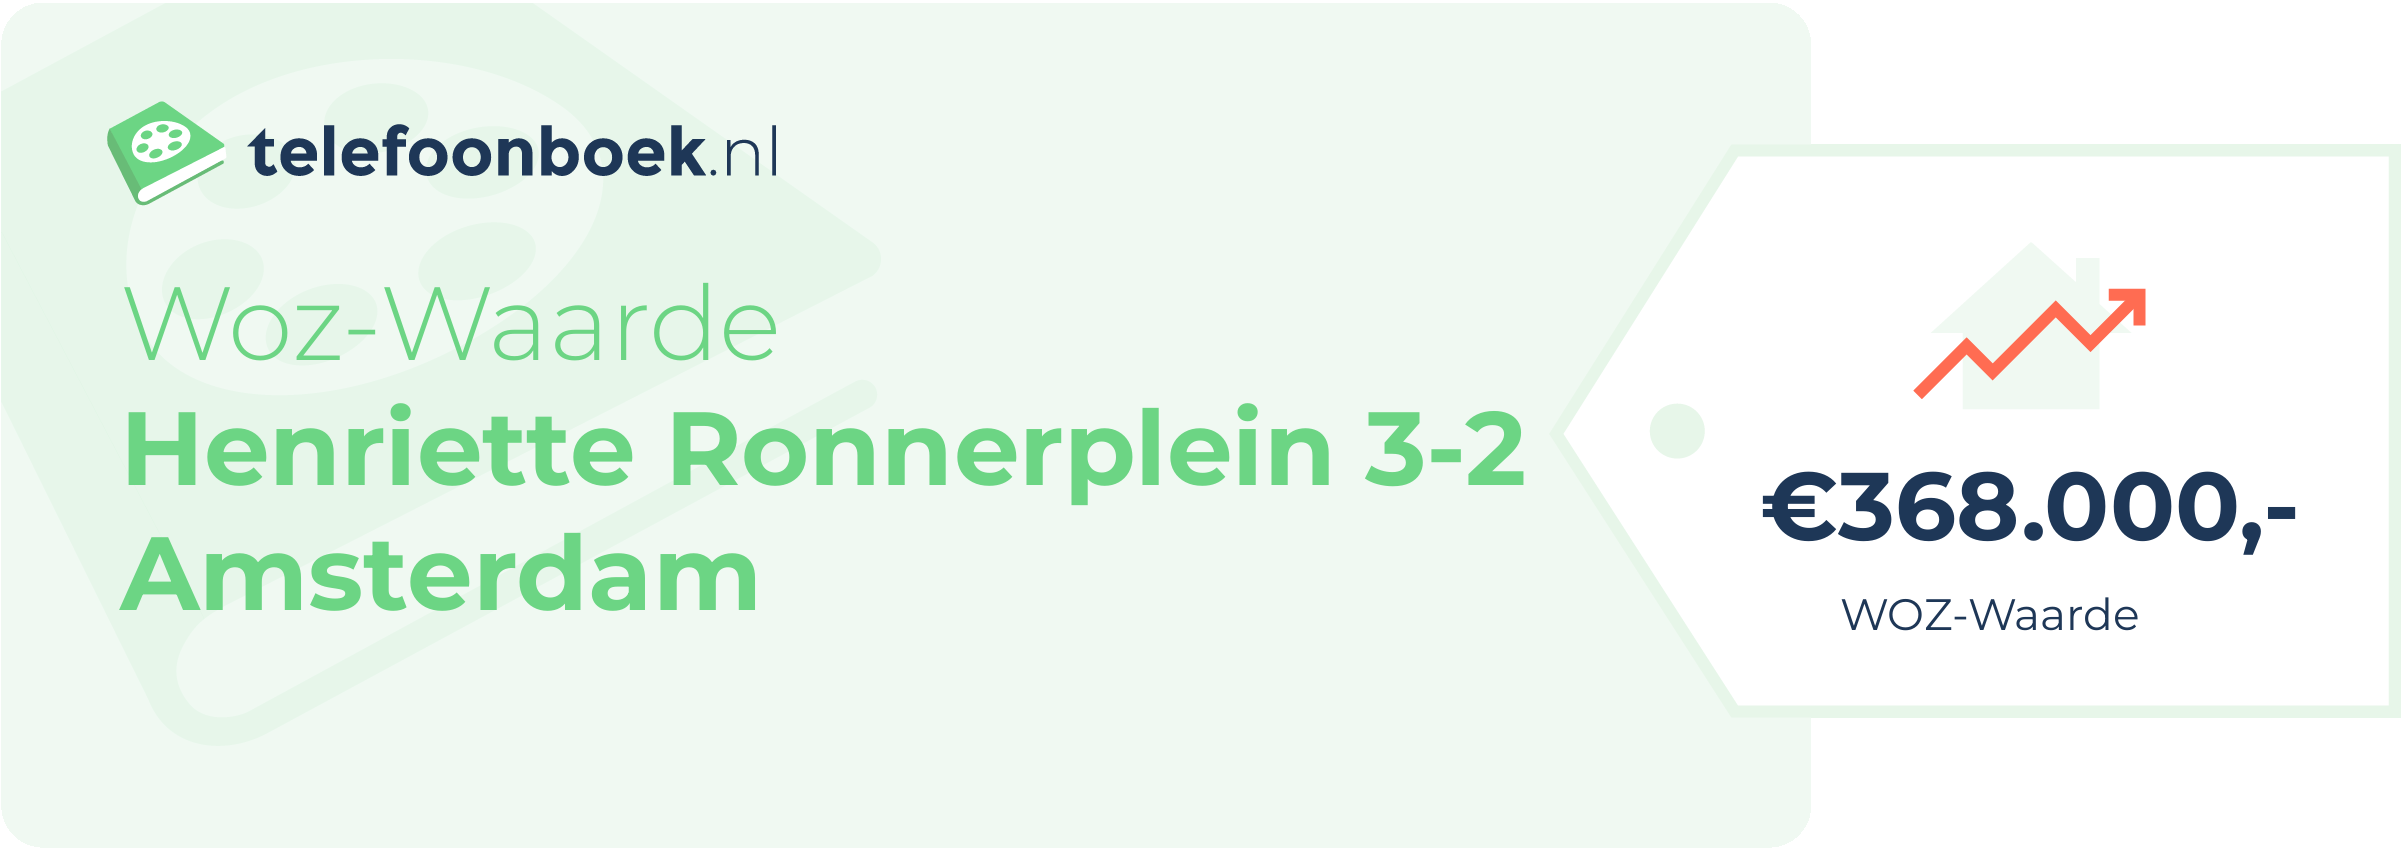 WOZ-waarde Henriette Ronnerplein 3-2 Amsterdam